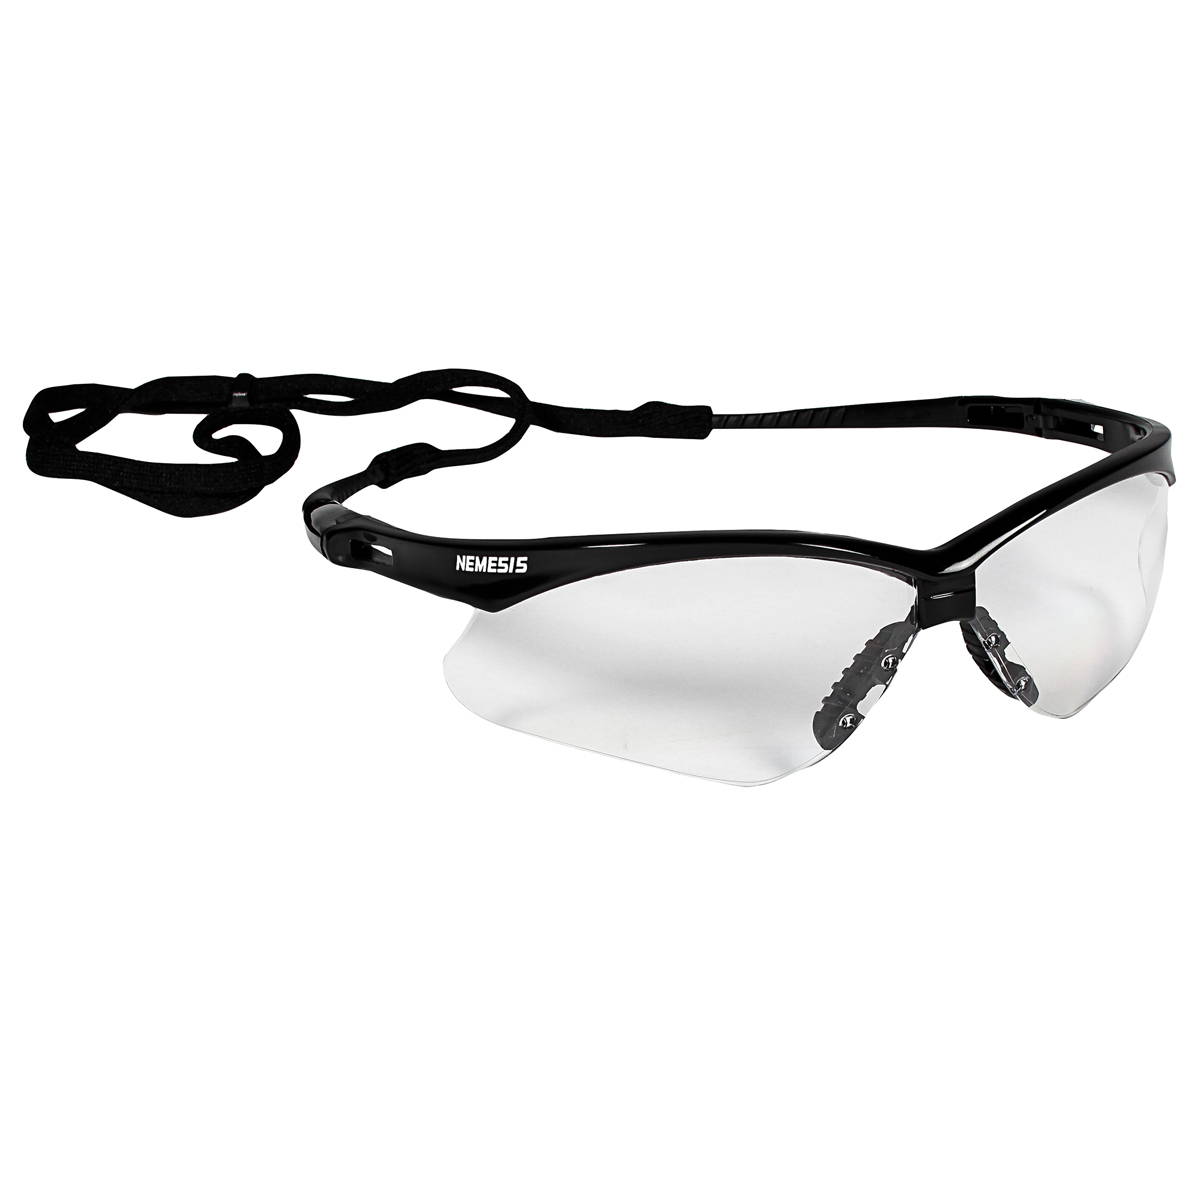 Kimberly-Clark Professional* KleenGuard™ Nemesis* Black Safety Glasses With Clear Anti-Fog/Hard Coat Lens - K4525679